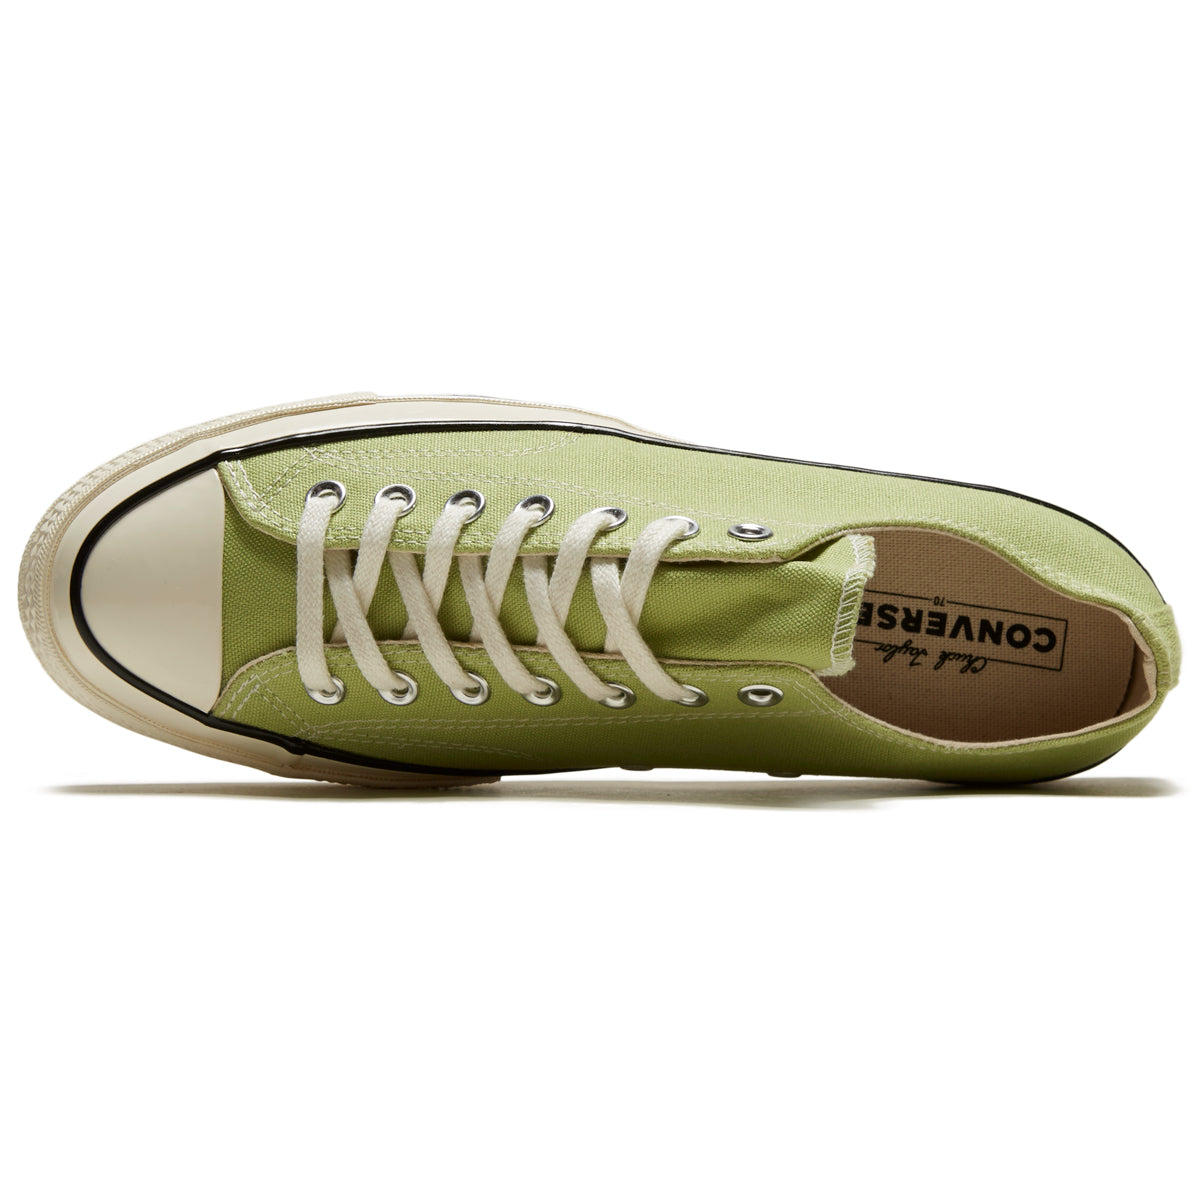 Converse Chuck 70 Ox Shoes - Vitality Green/Egret/Black image 3